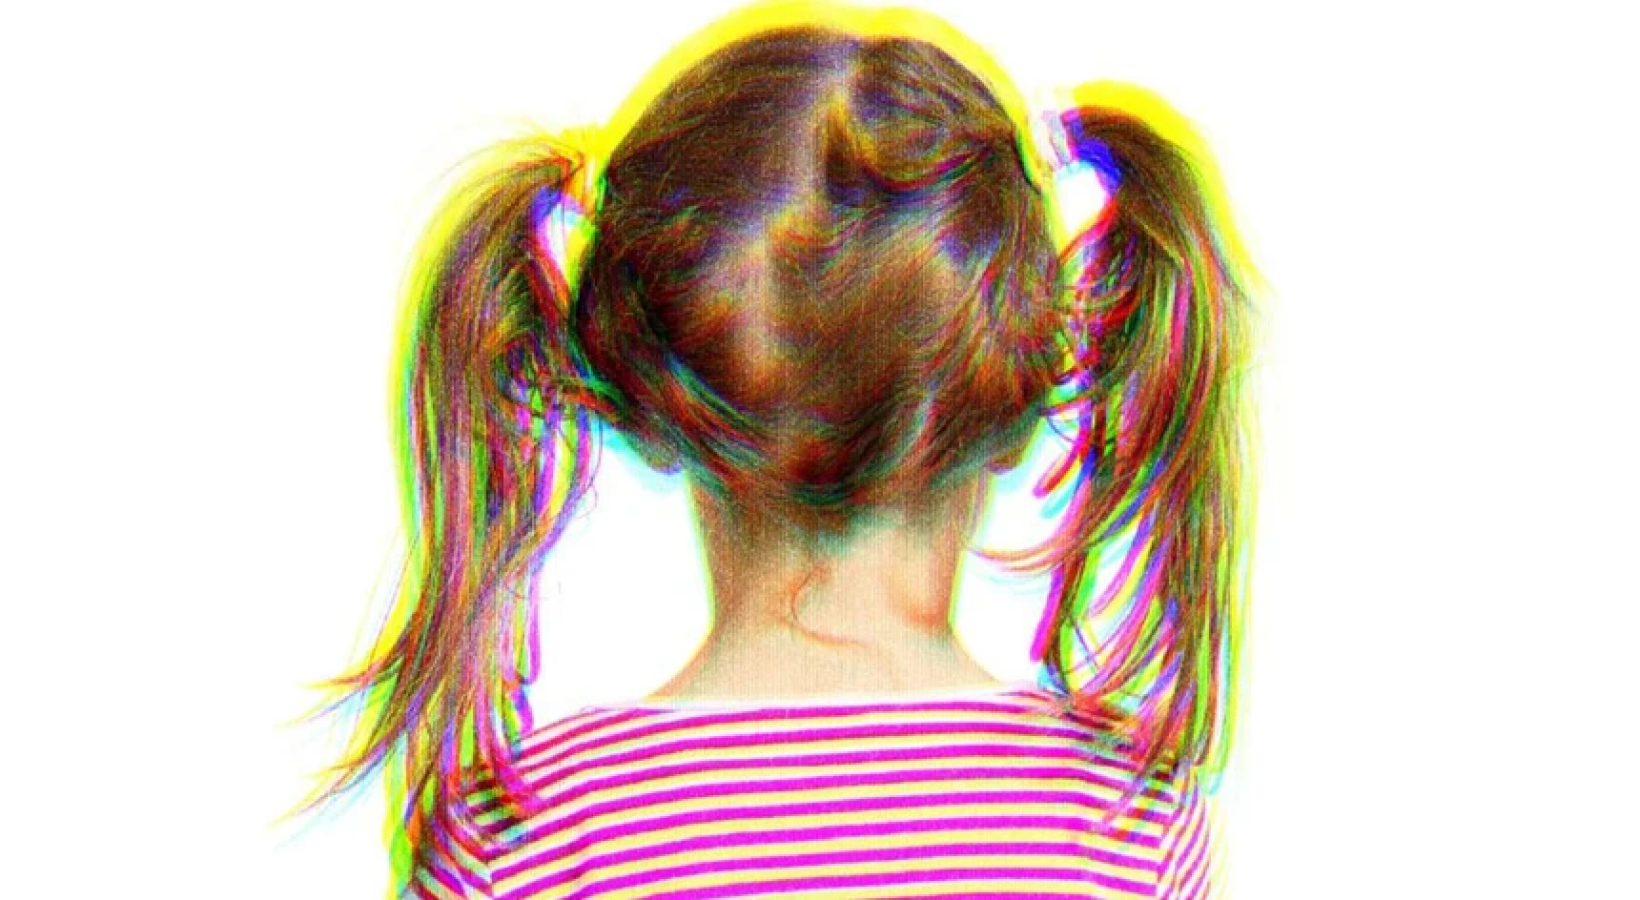 Inteligência artificial multiplica imagens de abuso sexual de menores